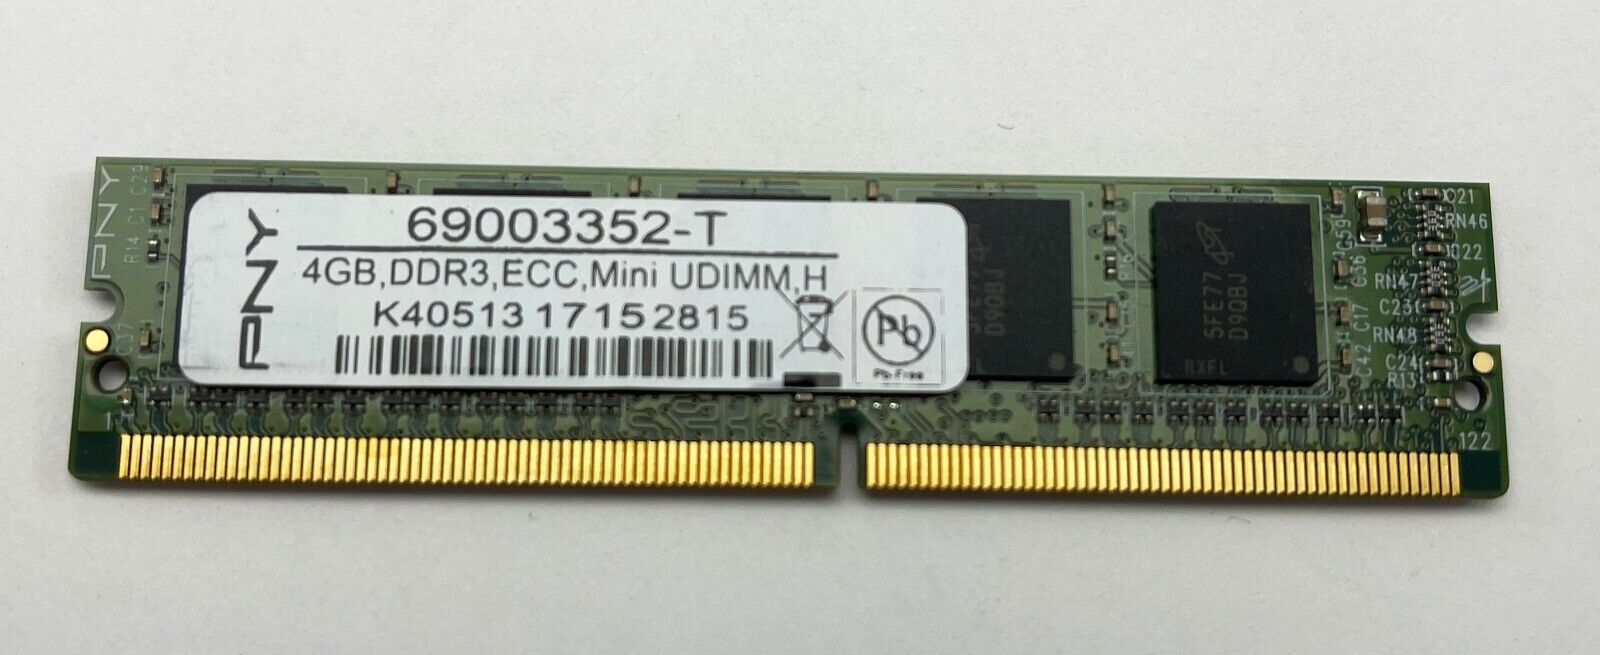 Lot of 4 PNY 69003352-T 4GB PC3-10600 DDR3 ECC 244-pin ECC Mini-UDIMM RAM Memory